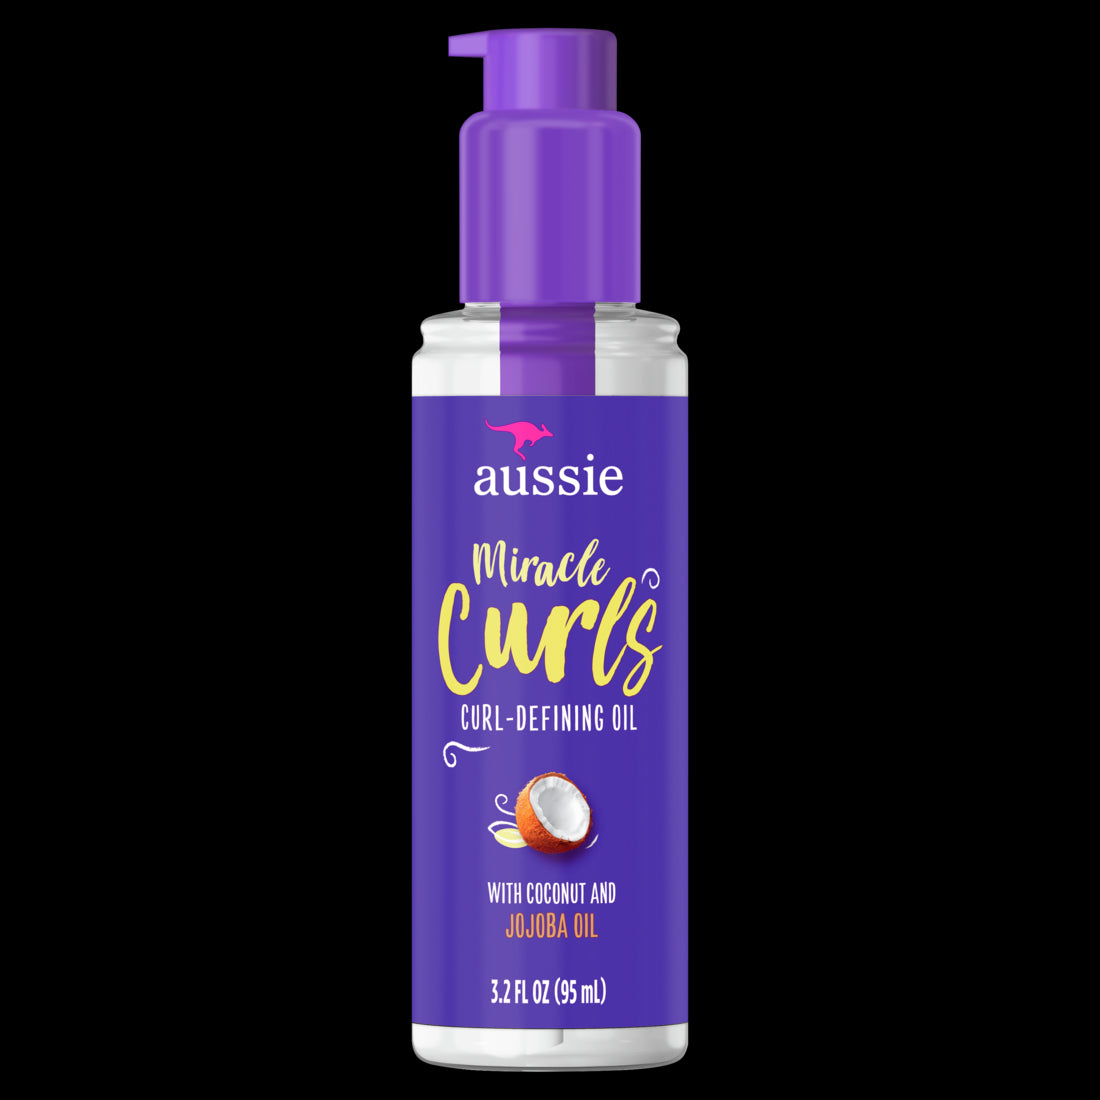 Aussie Miracle Curls Curl-Defining Oil Hair Treatment with Jojoba Oil - 3.2oz/12pk